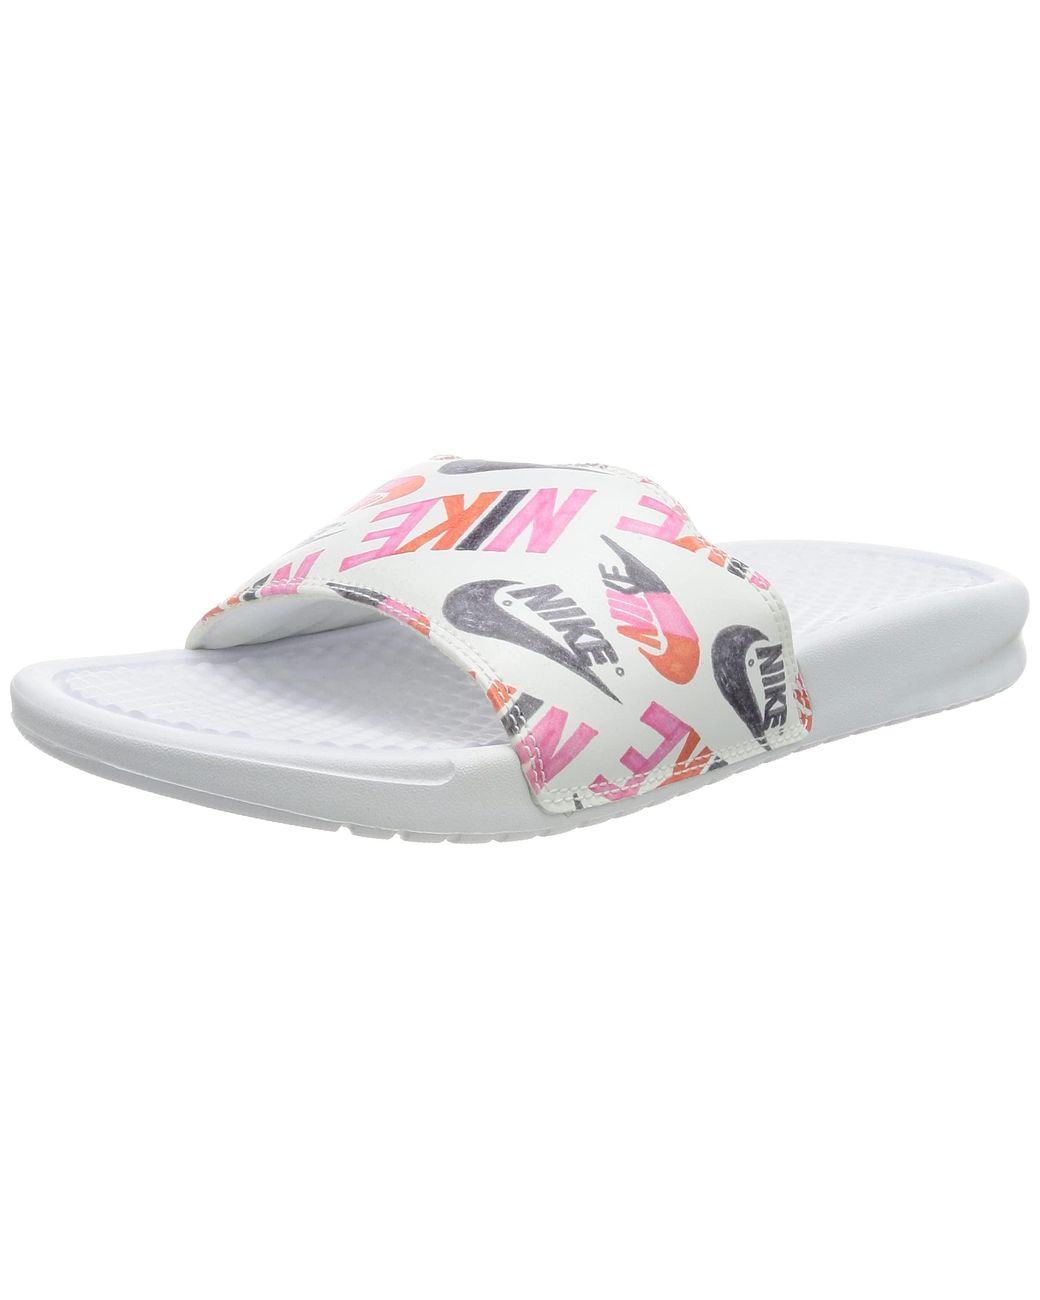 Nike S WMNS Benassi JDI Print Running Shoe in Pink - Sparen Sie 40% - Lyst